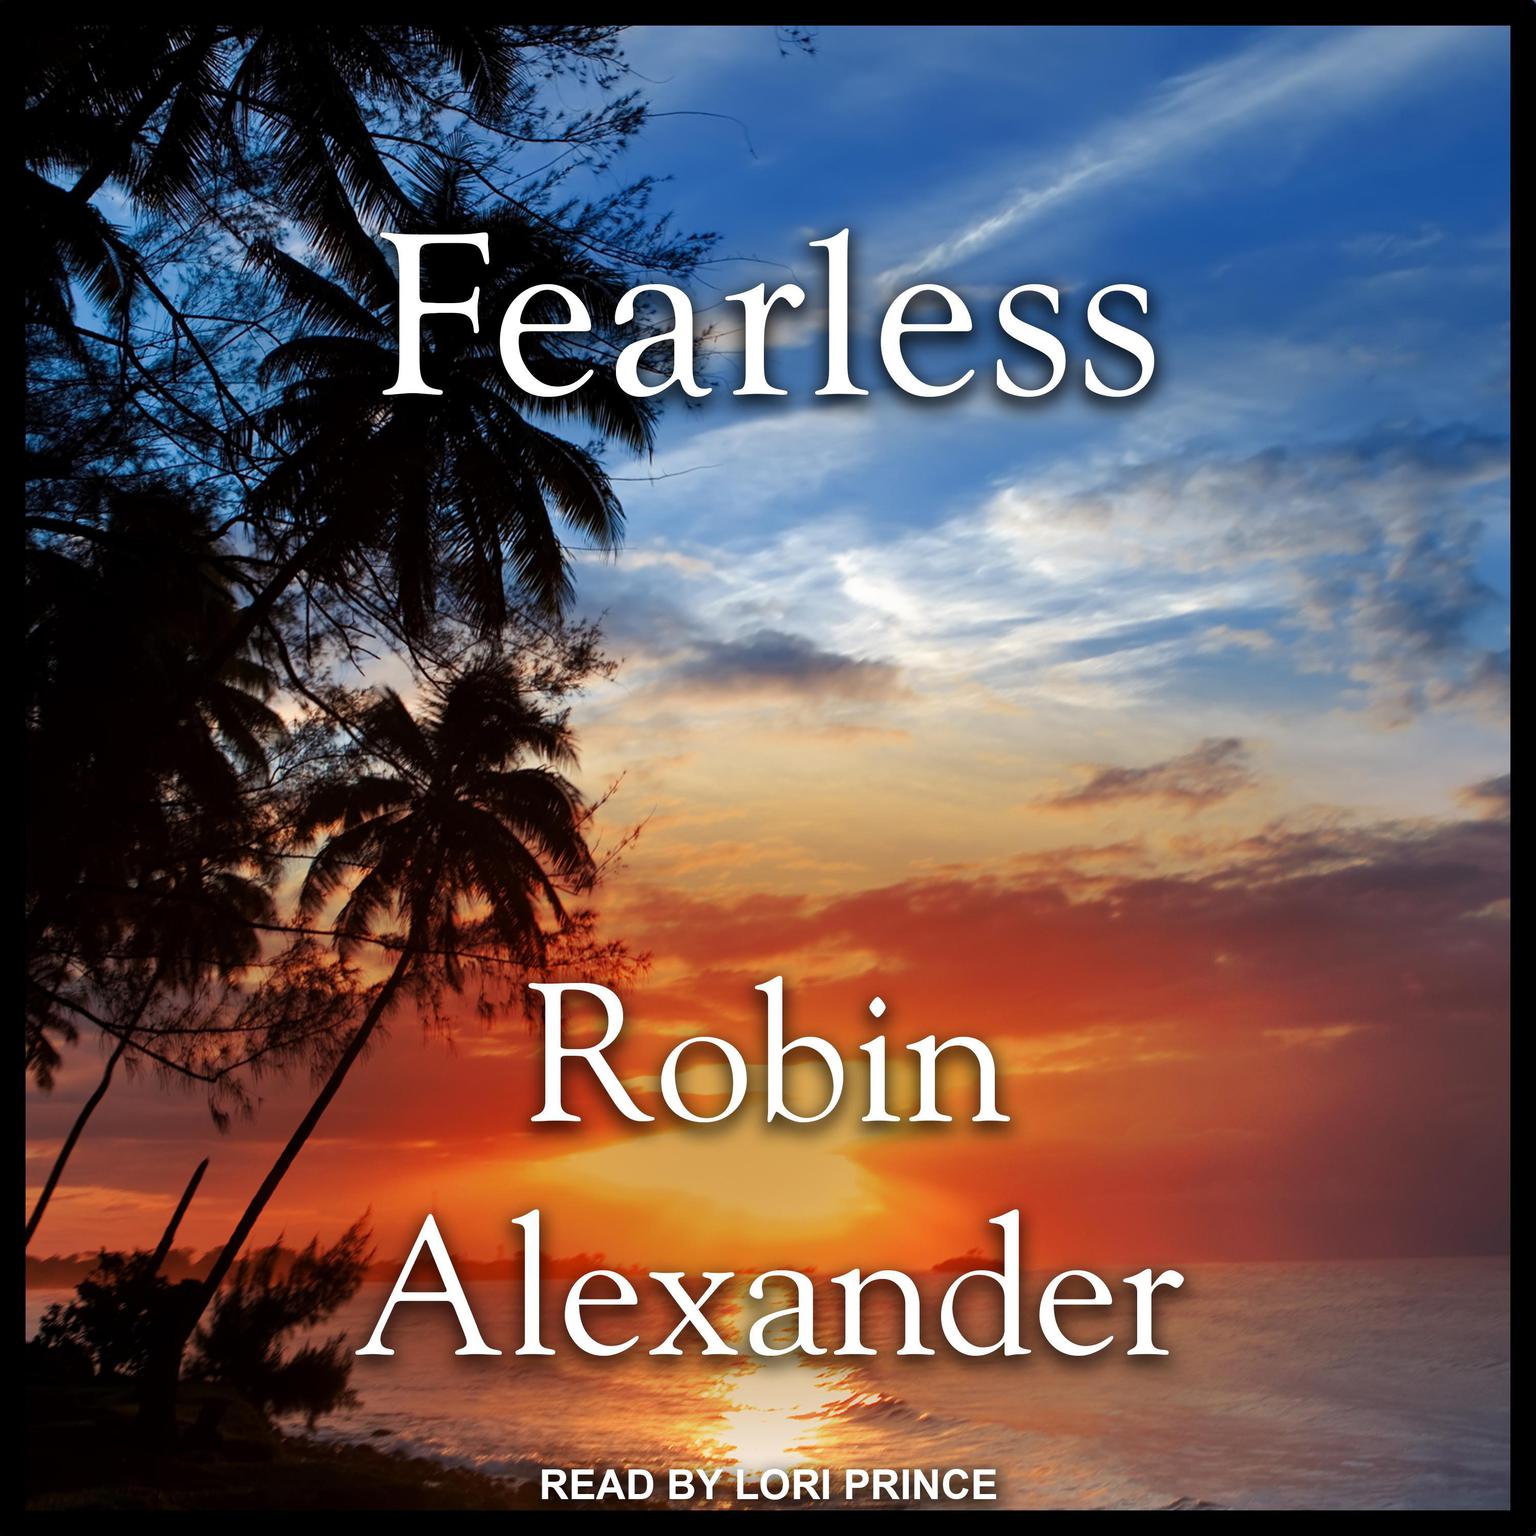 Robin Alexander, Lori Prince: Fearless (AudiobookFormat, 2017, Intaglio)